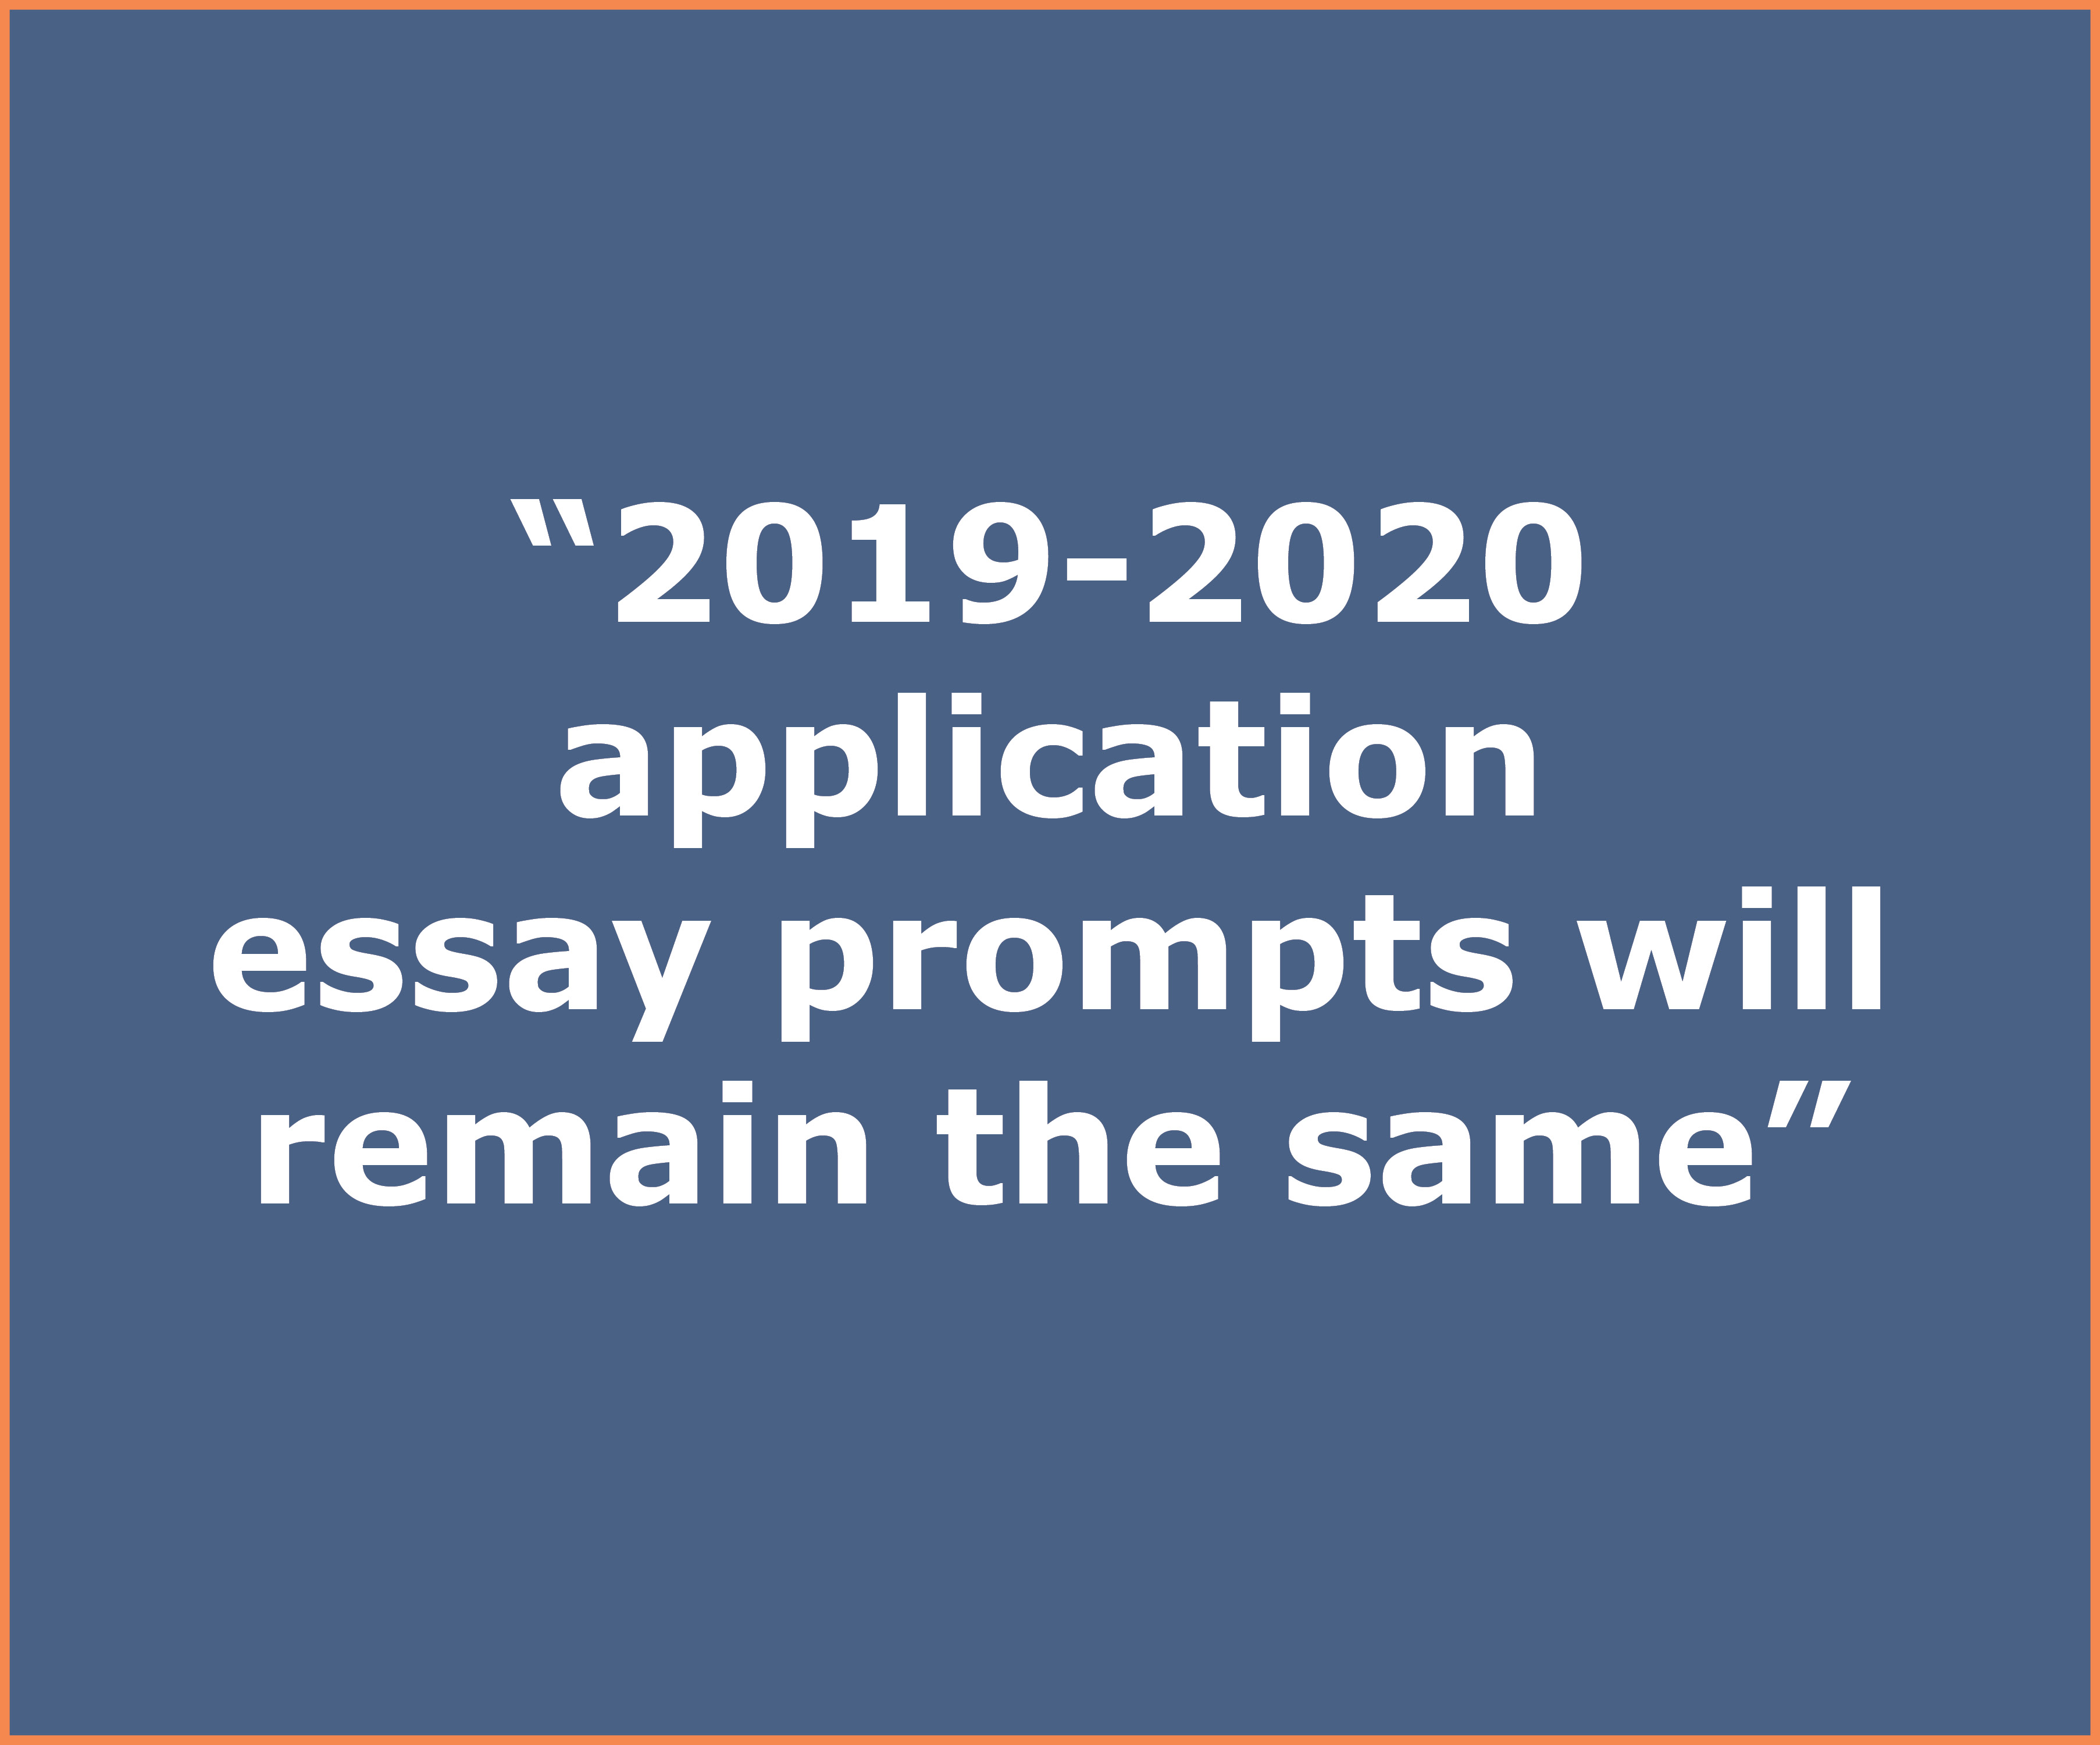 unc essay prompts 2020